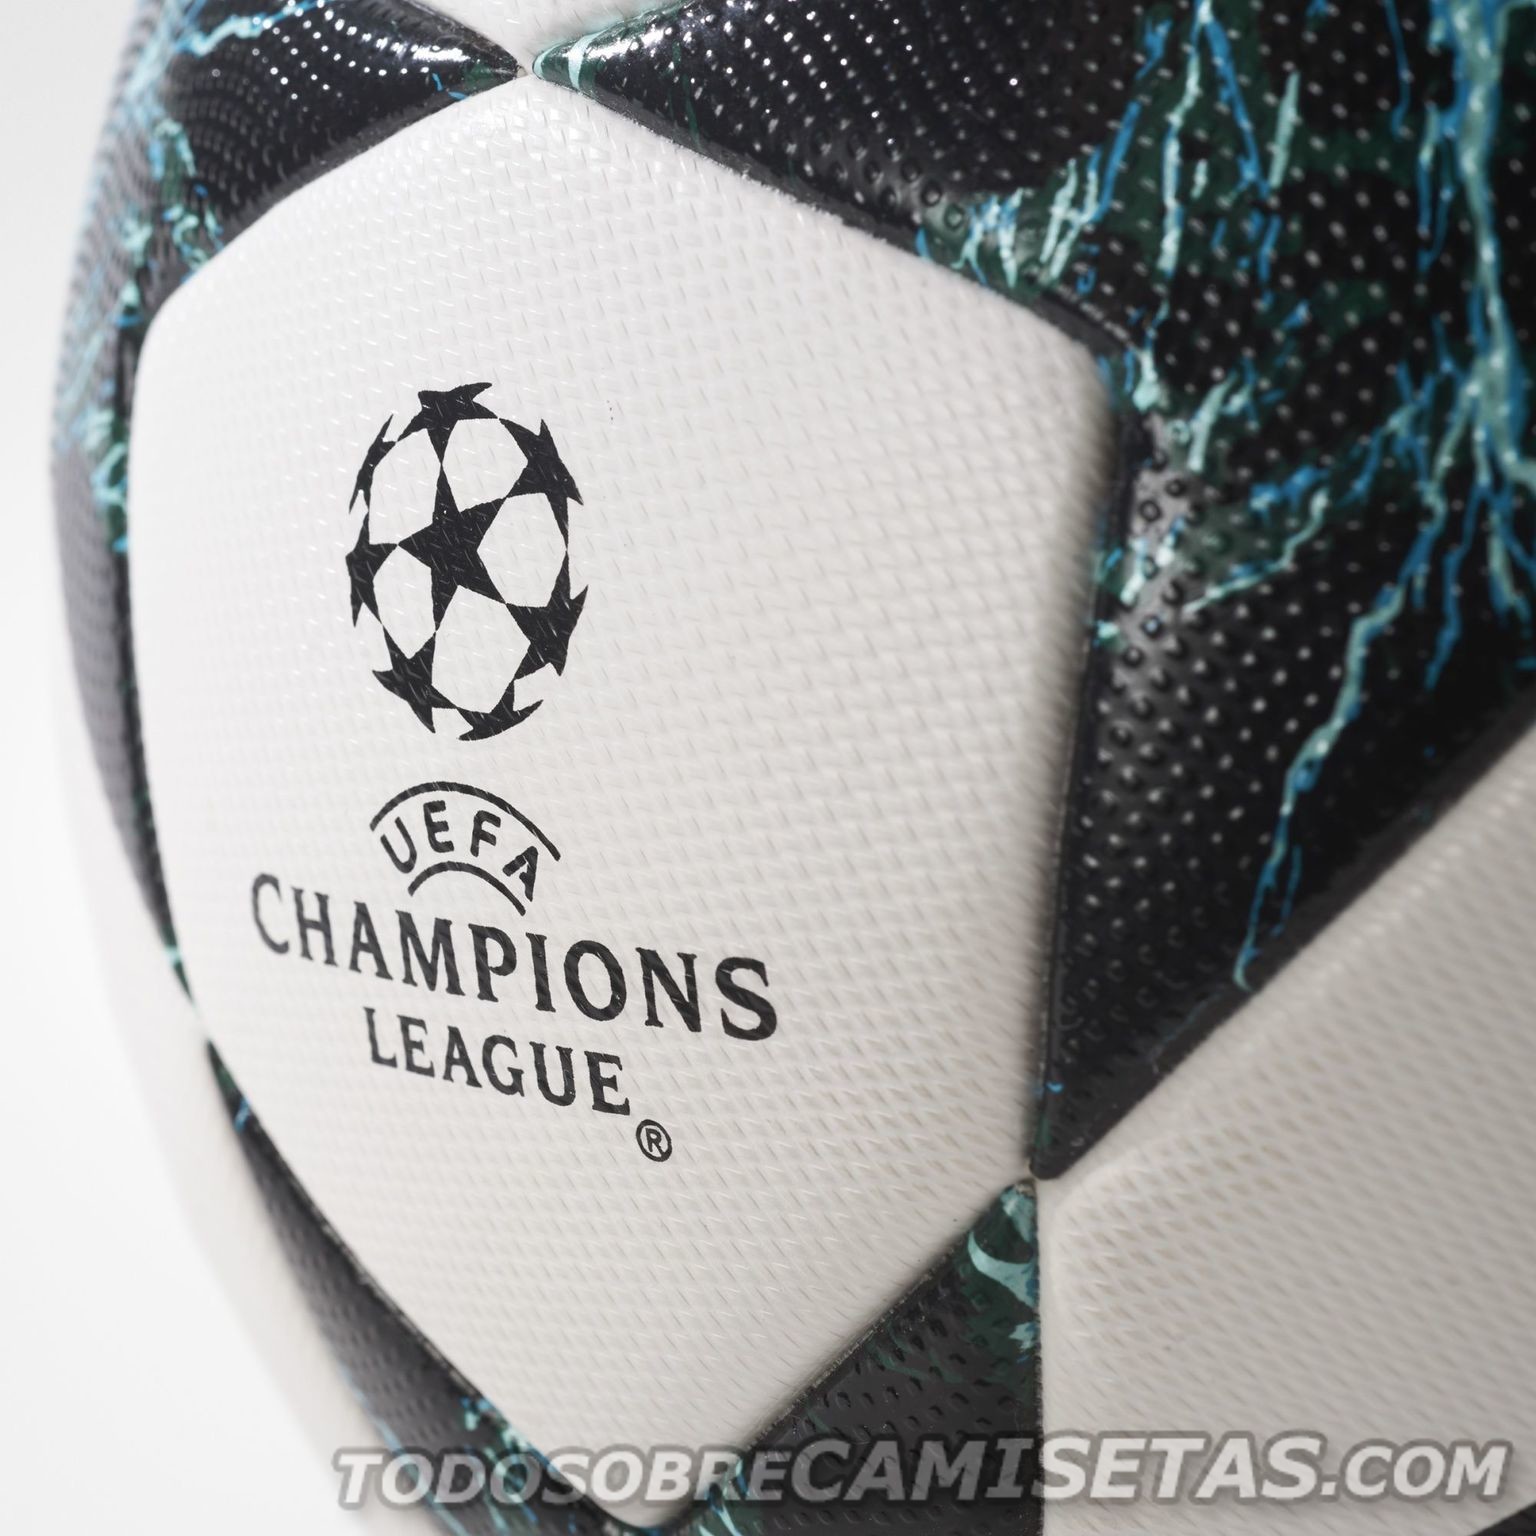 Adidas Champions League 2017-18 ball